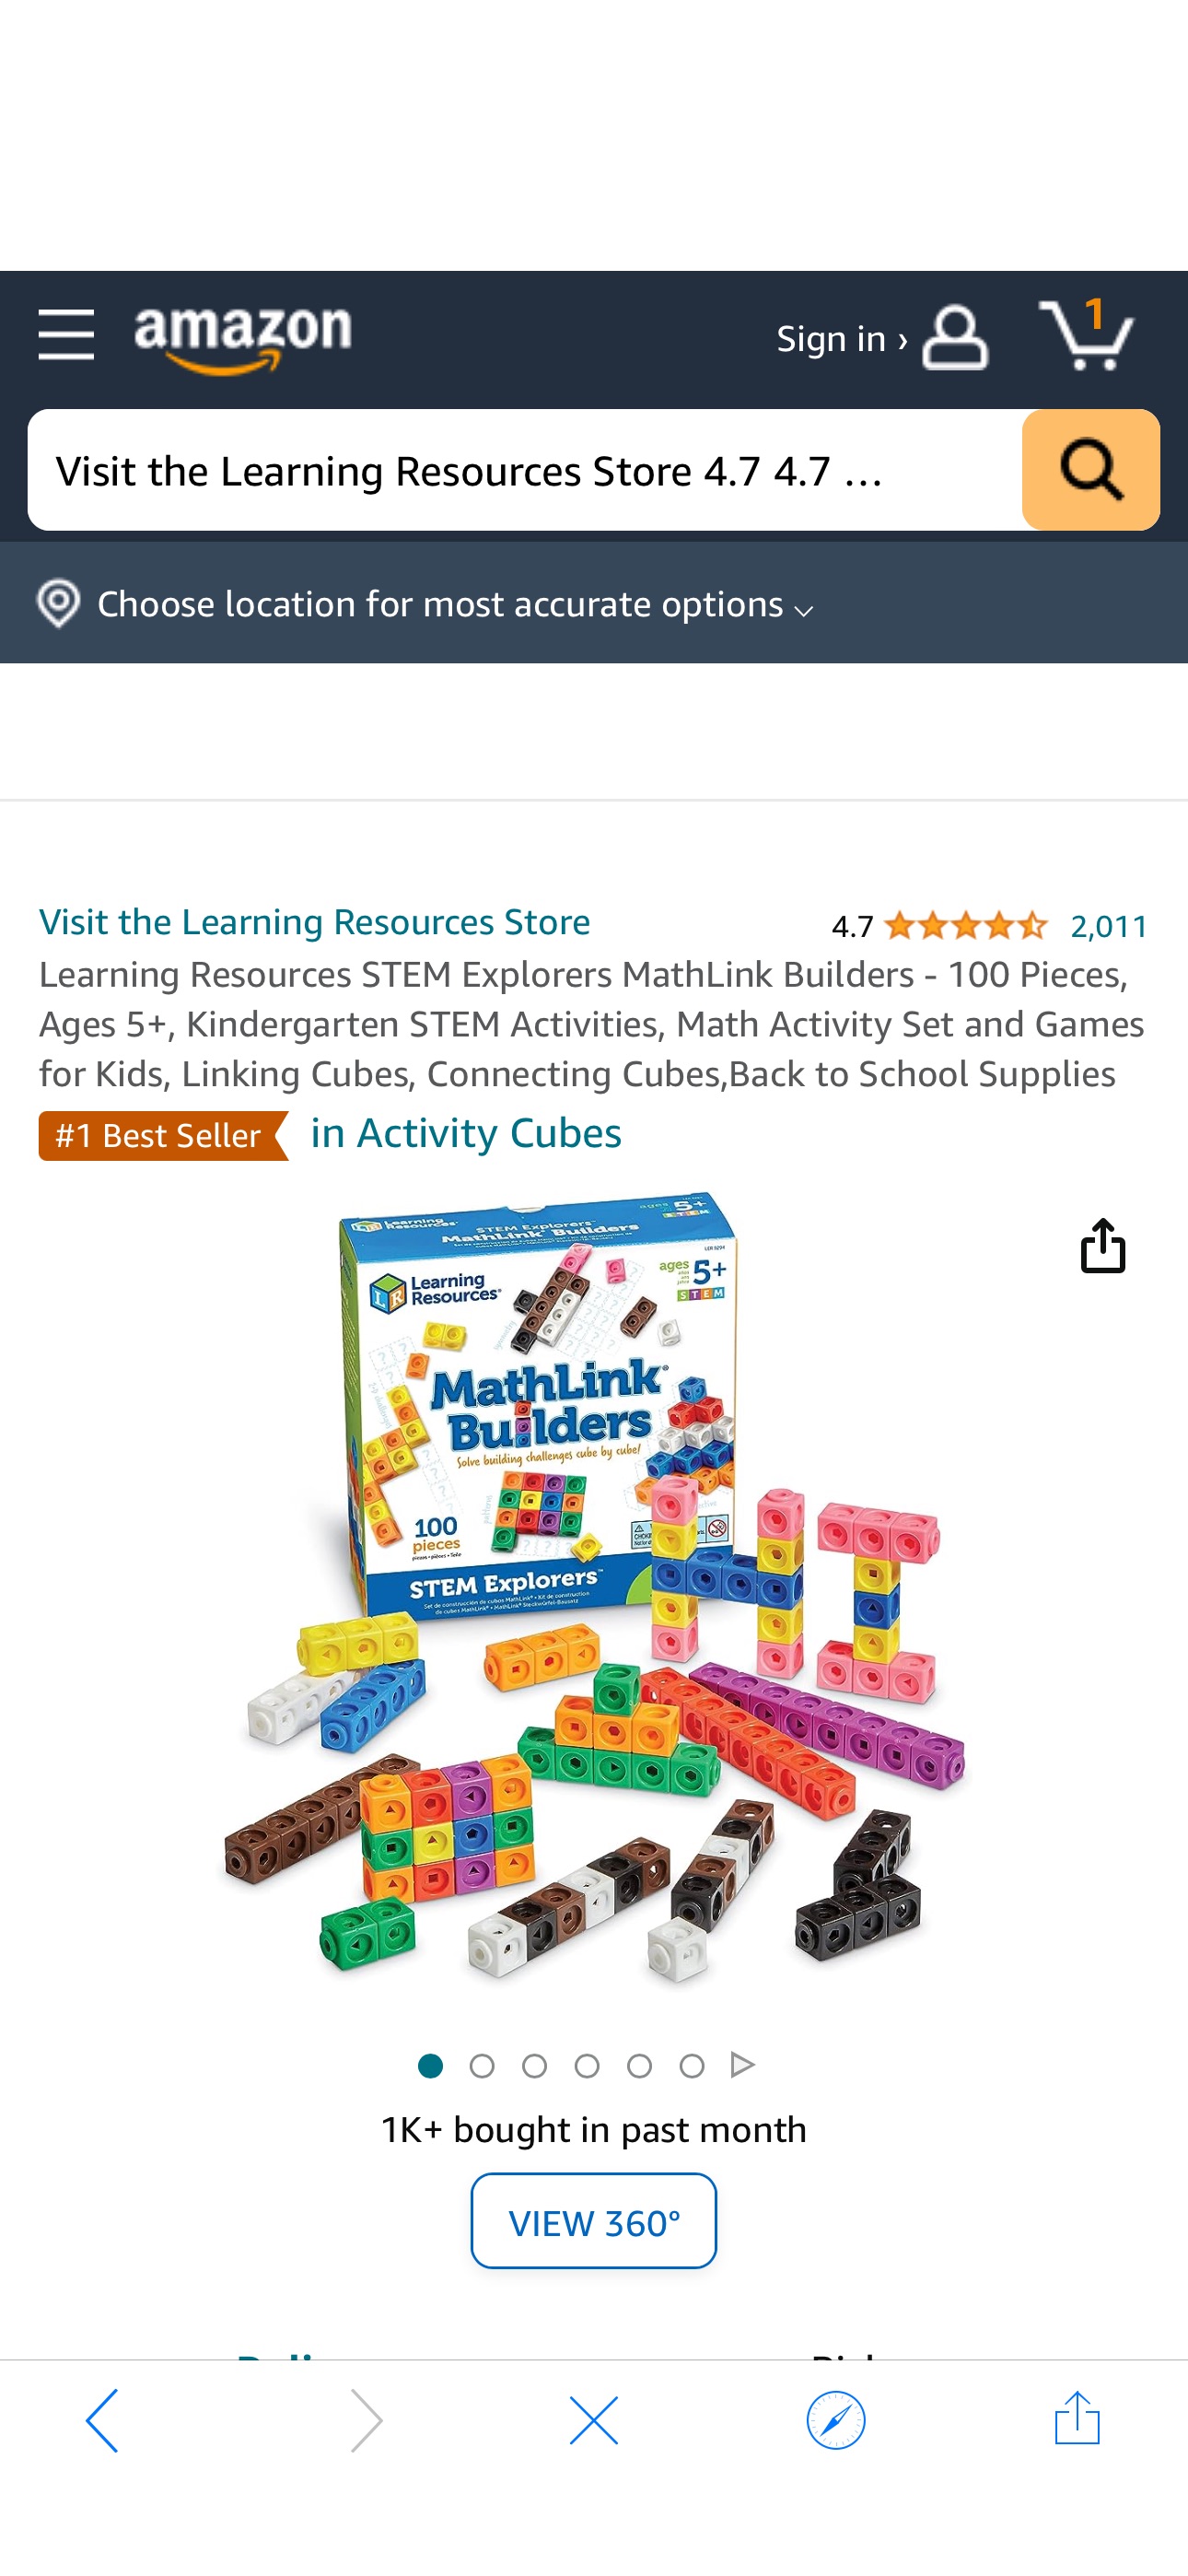 Amazon.com: Learning Resources STEM Explorers MathLink Builders - 100 Pieces
数感学习魔法方块